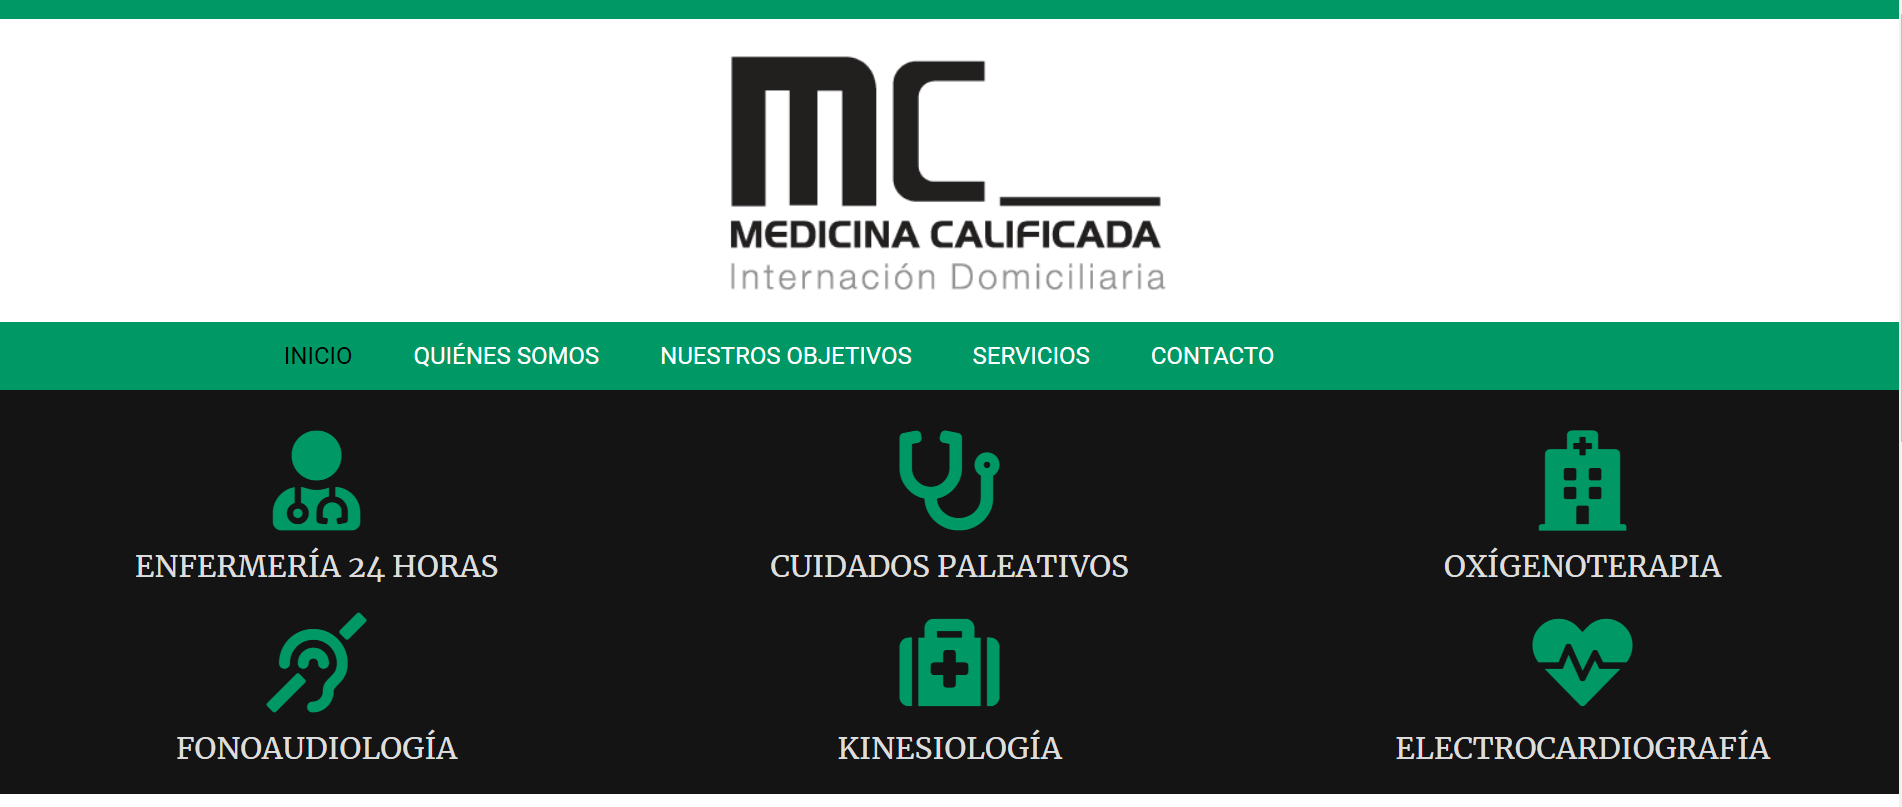 (c) Medicinacalificada.com.ar